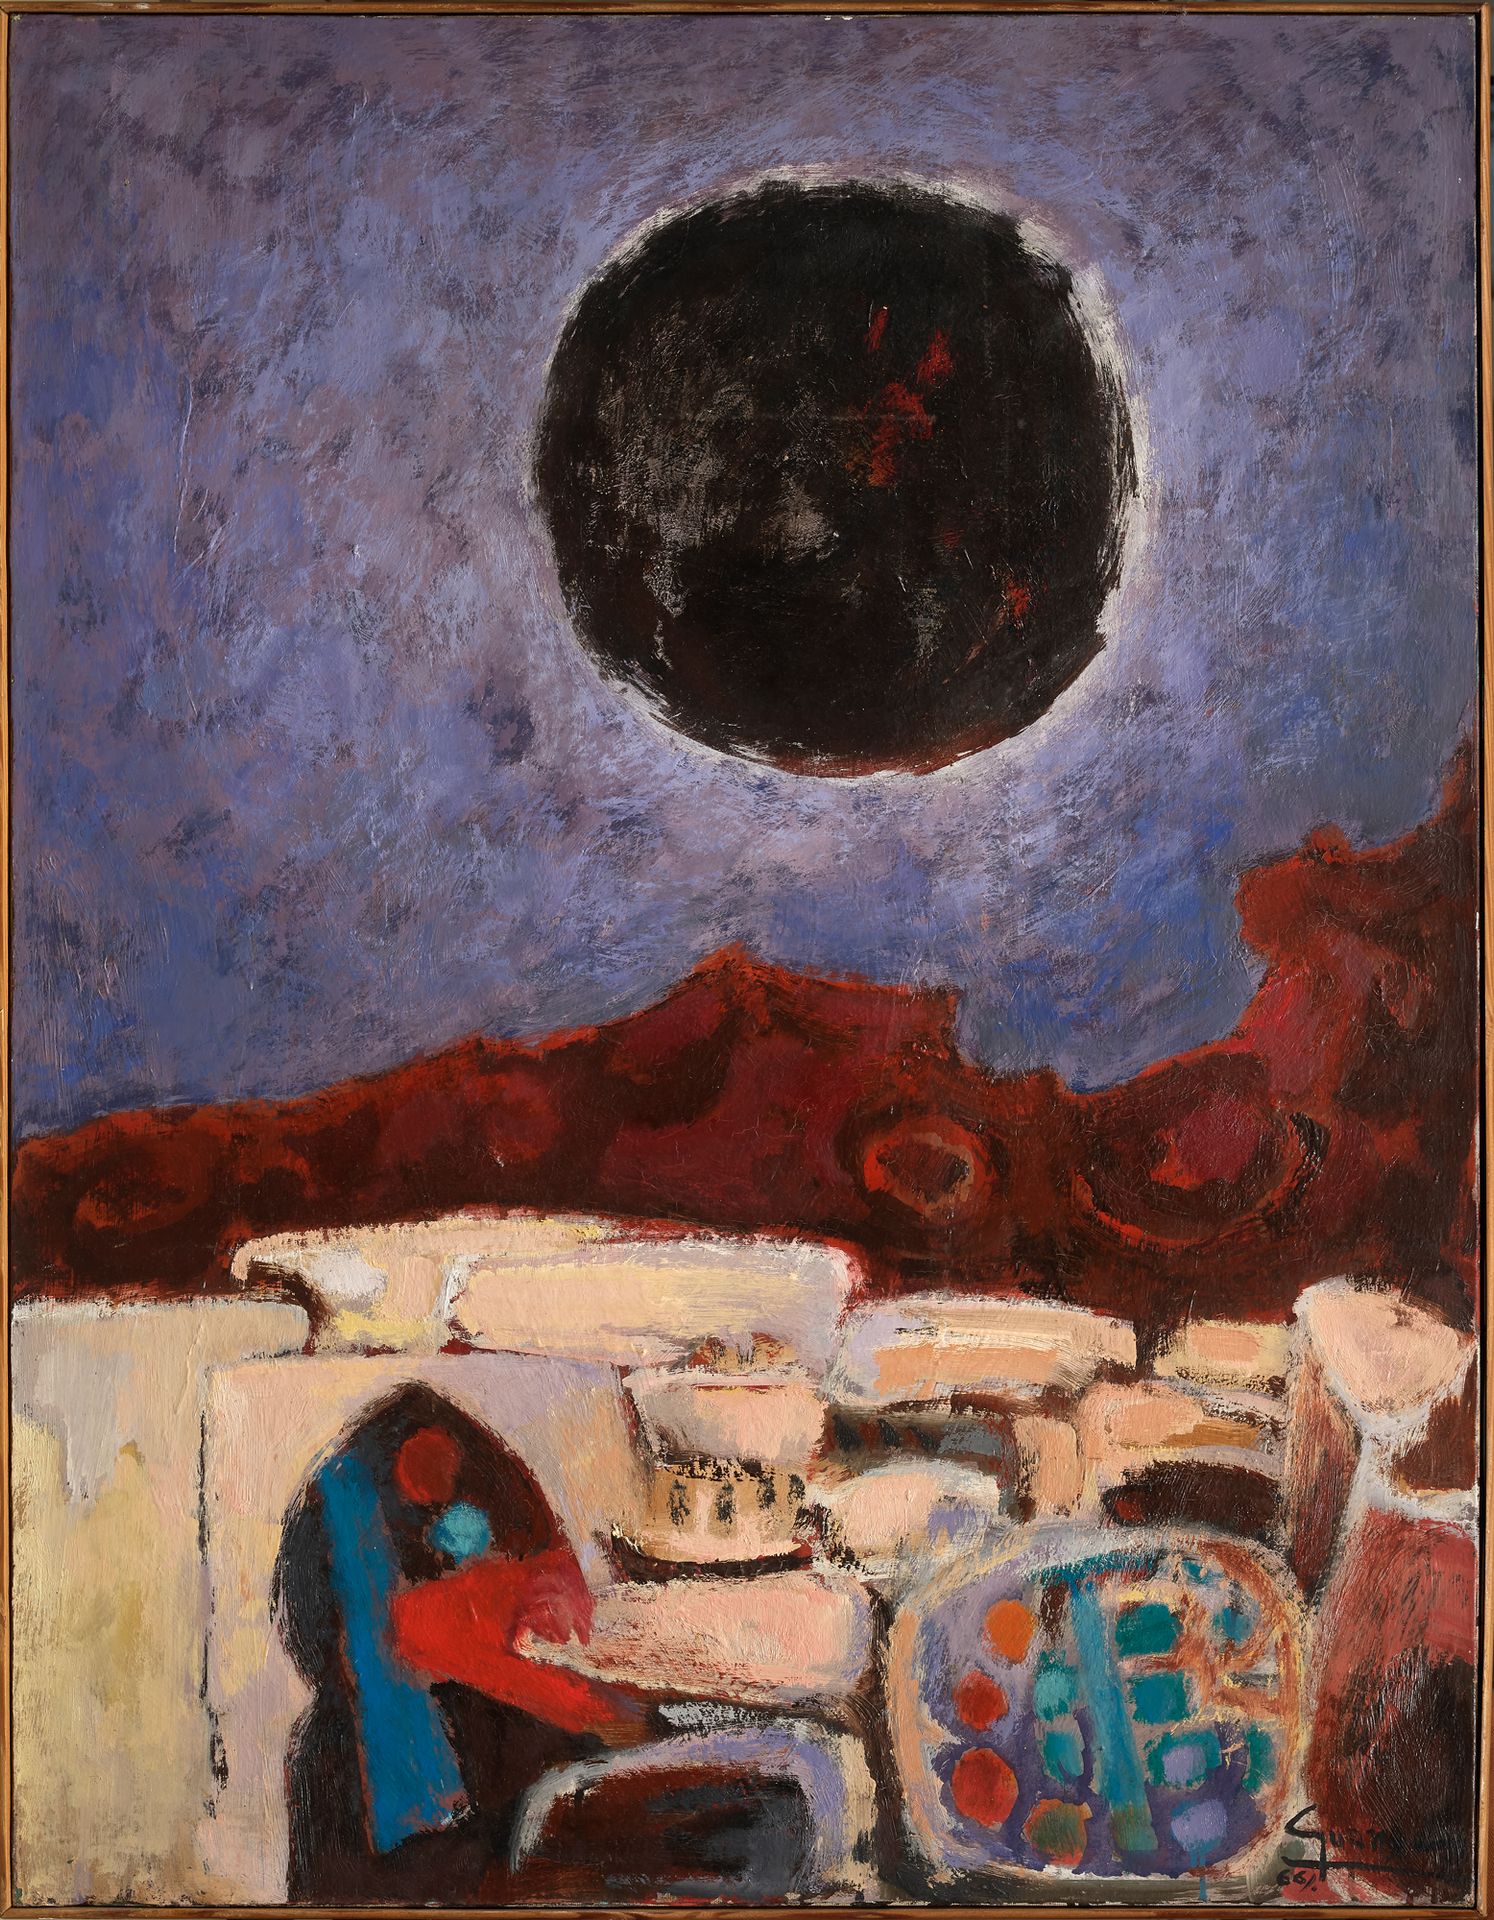 Antonio GUANSÉ (1926-2008) 
摩洛哥
布面油画，右下方有签名，背面有会签、标题和日期
81 x 65 cm